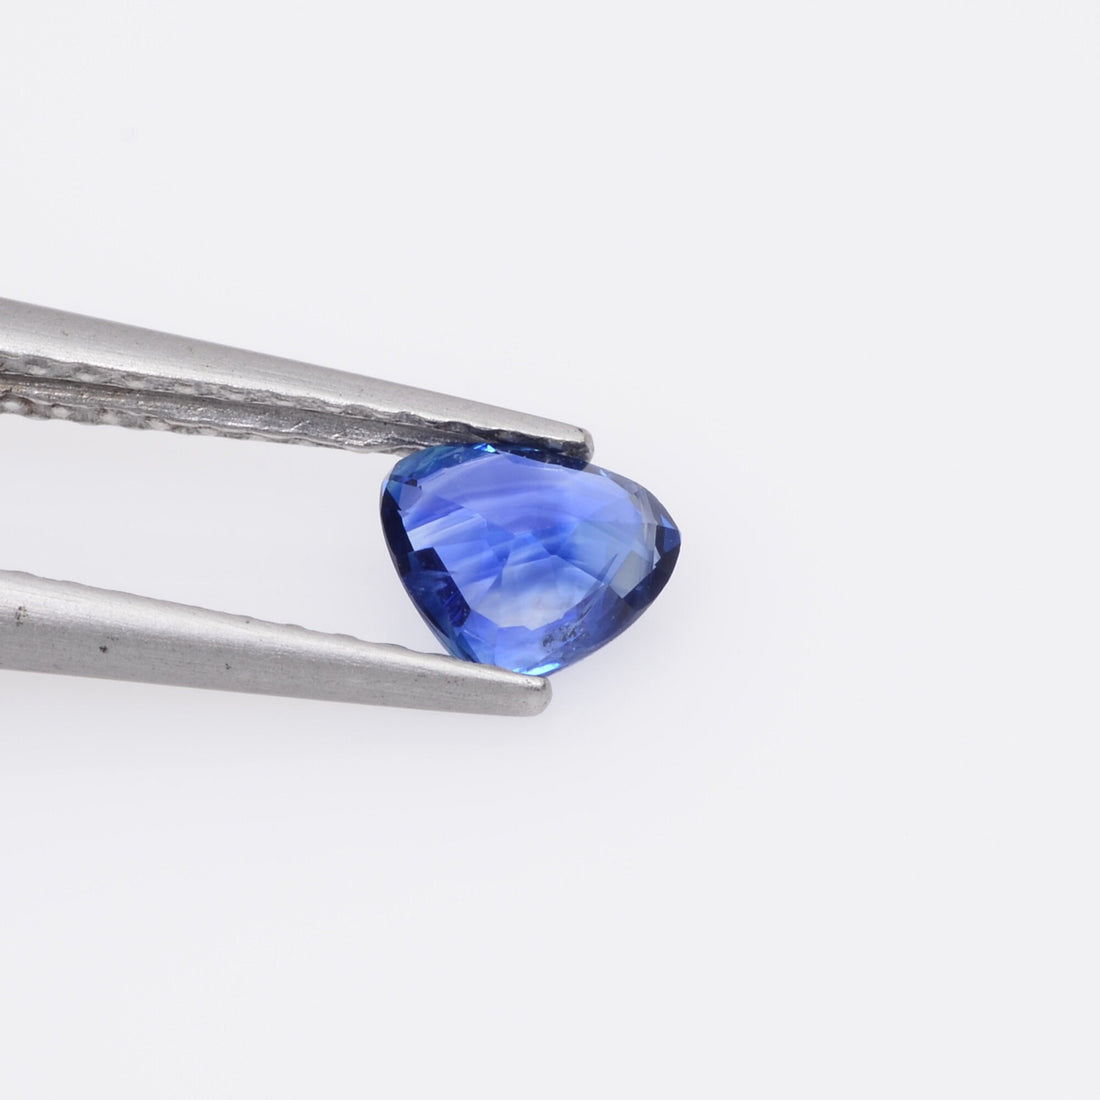 0.34-0.48 cts Natural Blue Sapphire Loose Gemstone Trillion Cut